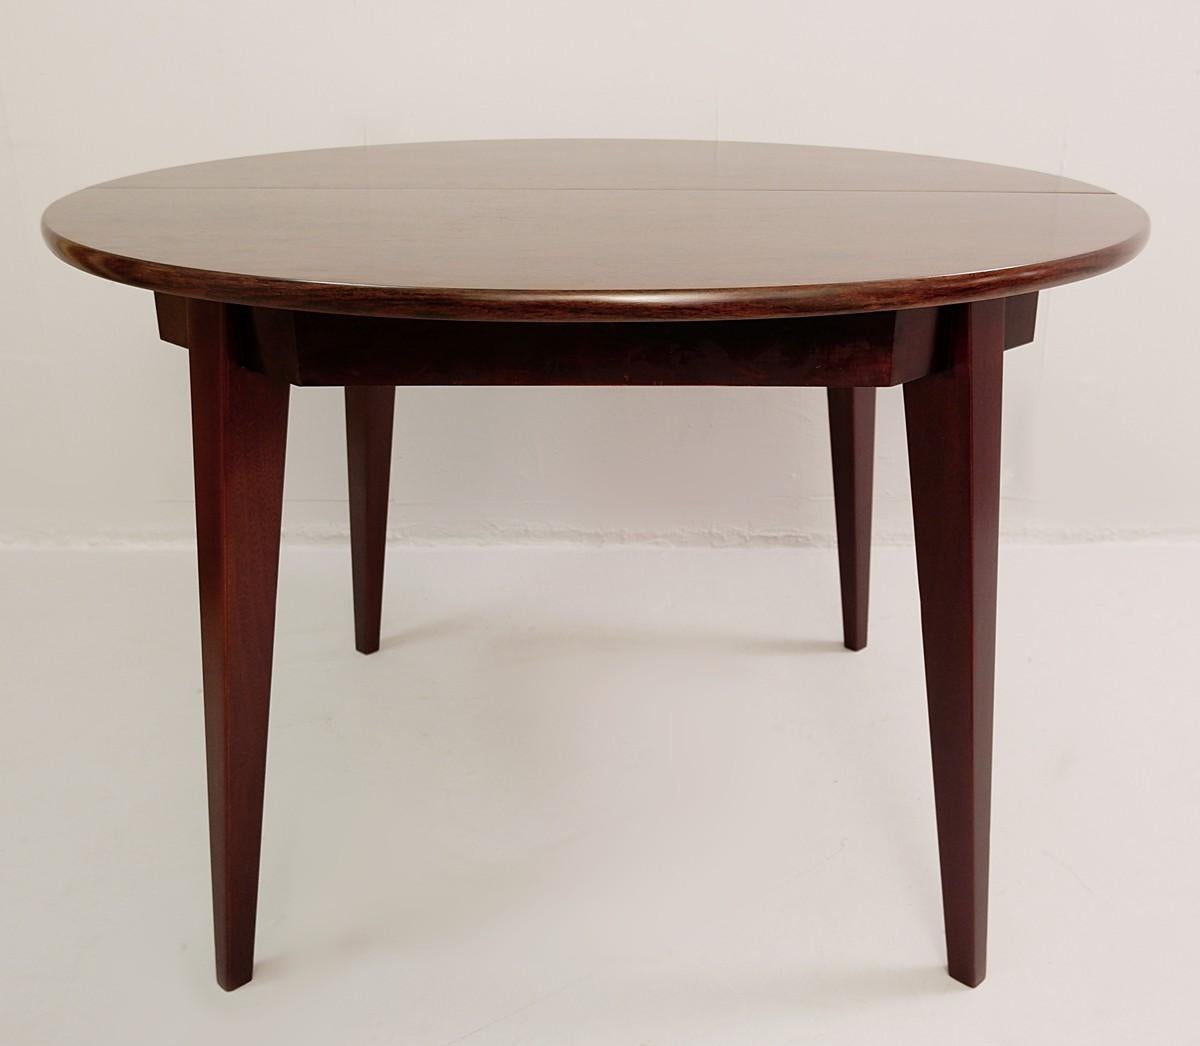 Italian circular extendable dining table. Measures: Ø 120cm

extension 40cm.